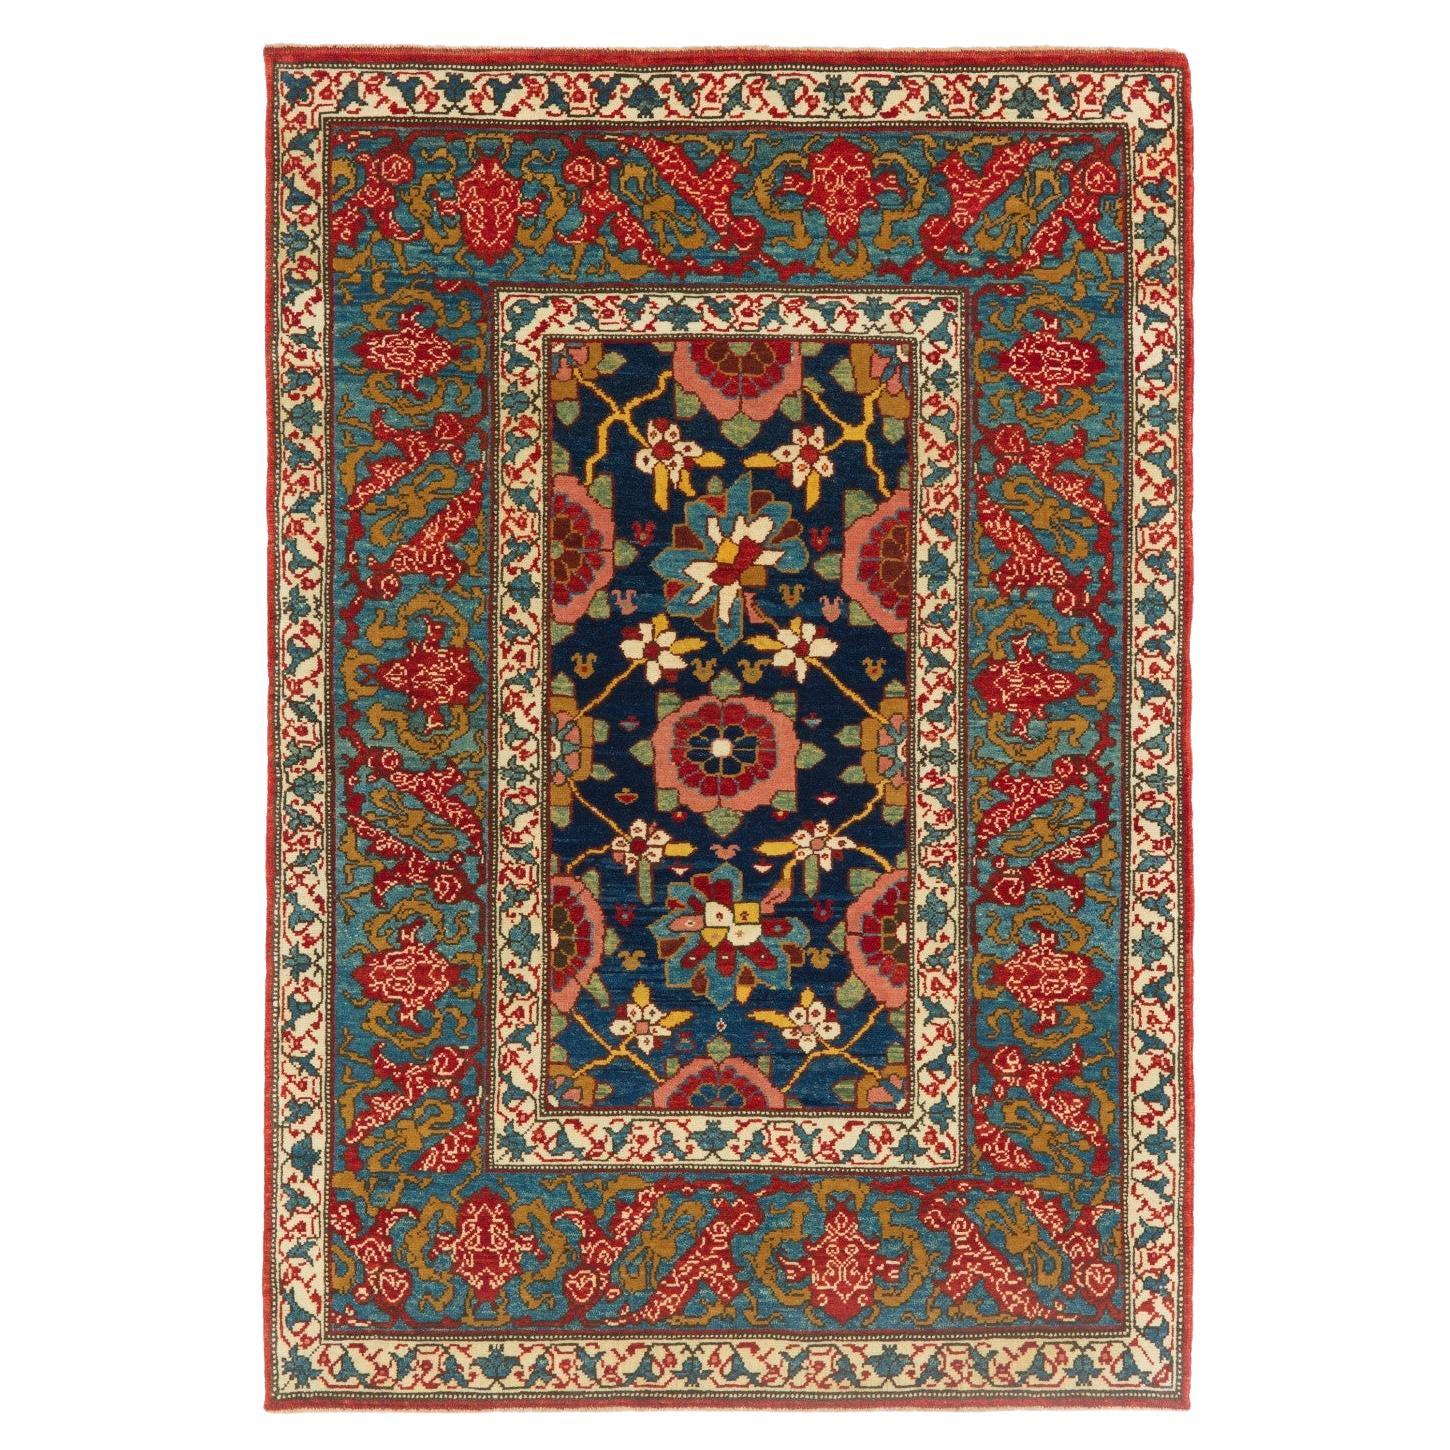 Ararat Rugs Mina Khani Rug with Bidjar Border Persian Revival Carpet Natural Dye